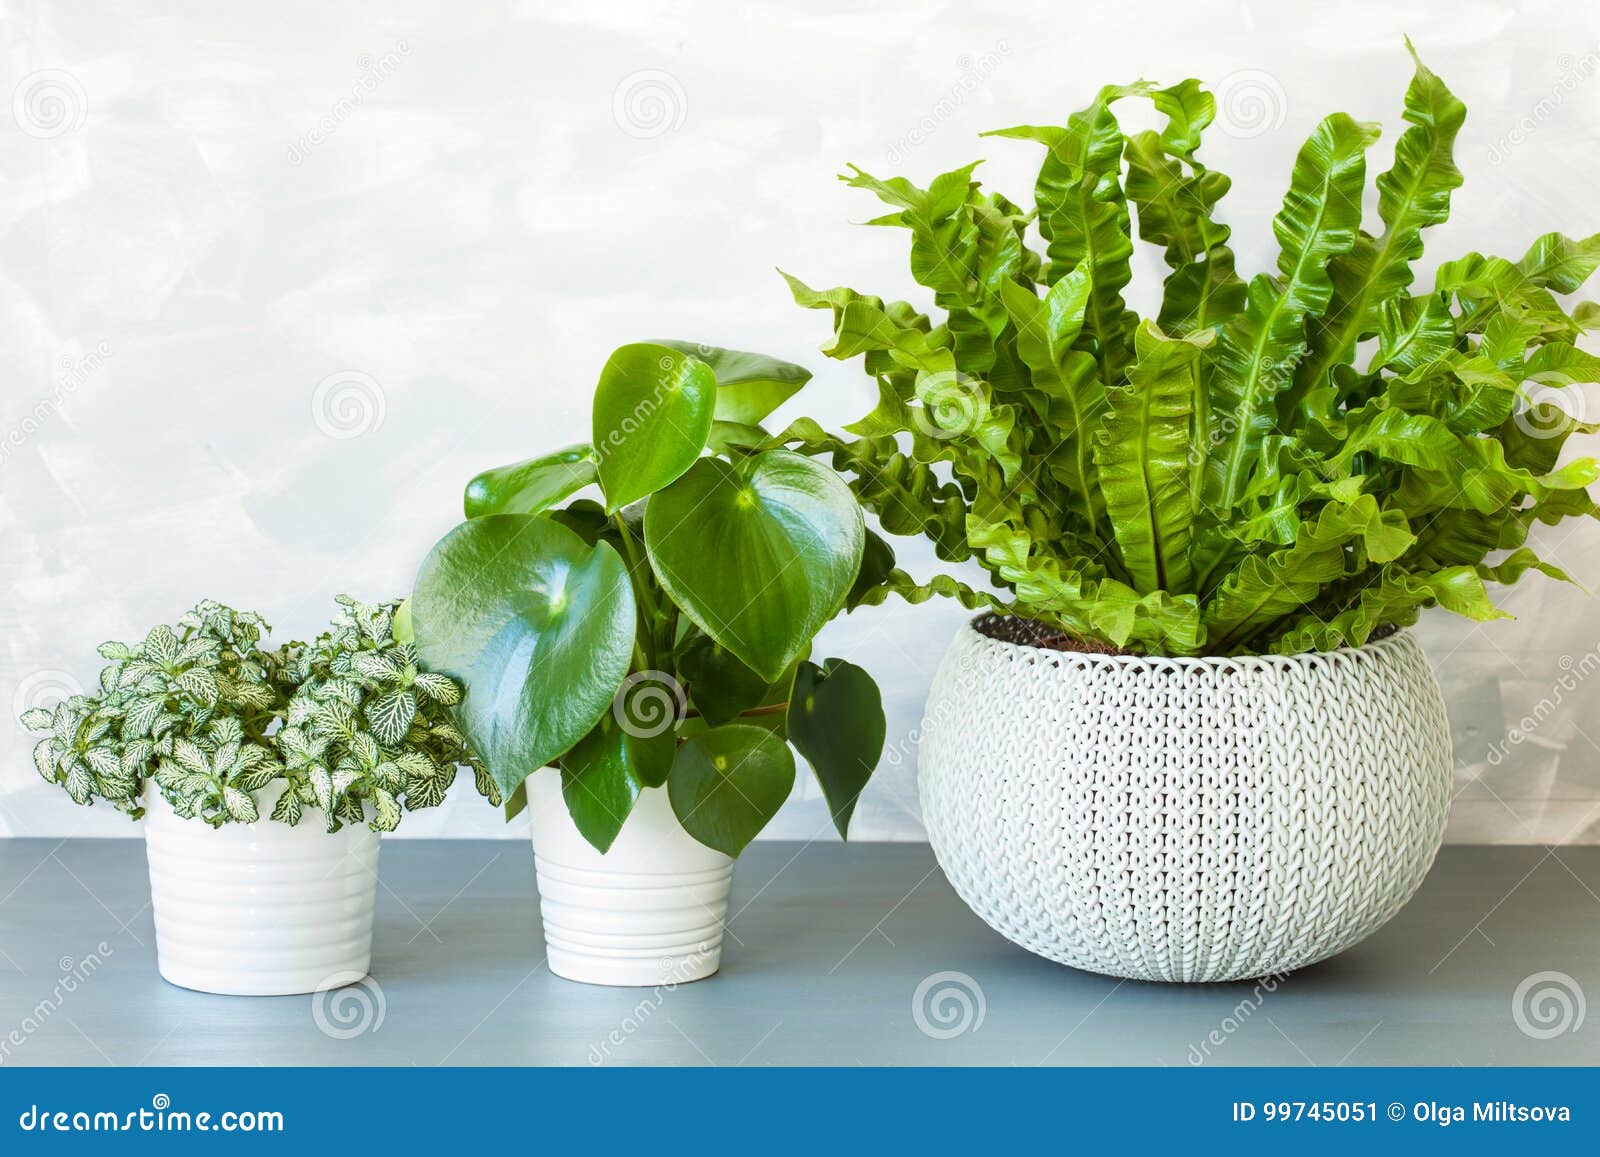 houseplant asplenium nidus, peperomia and fittonia in flowerpot